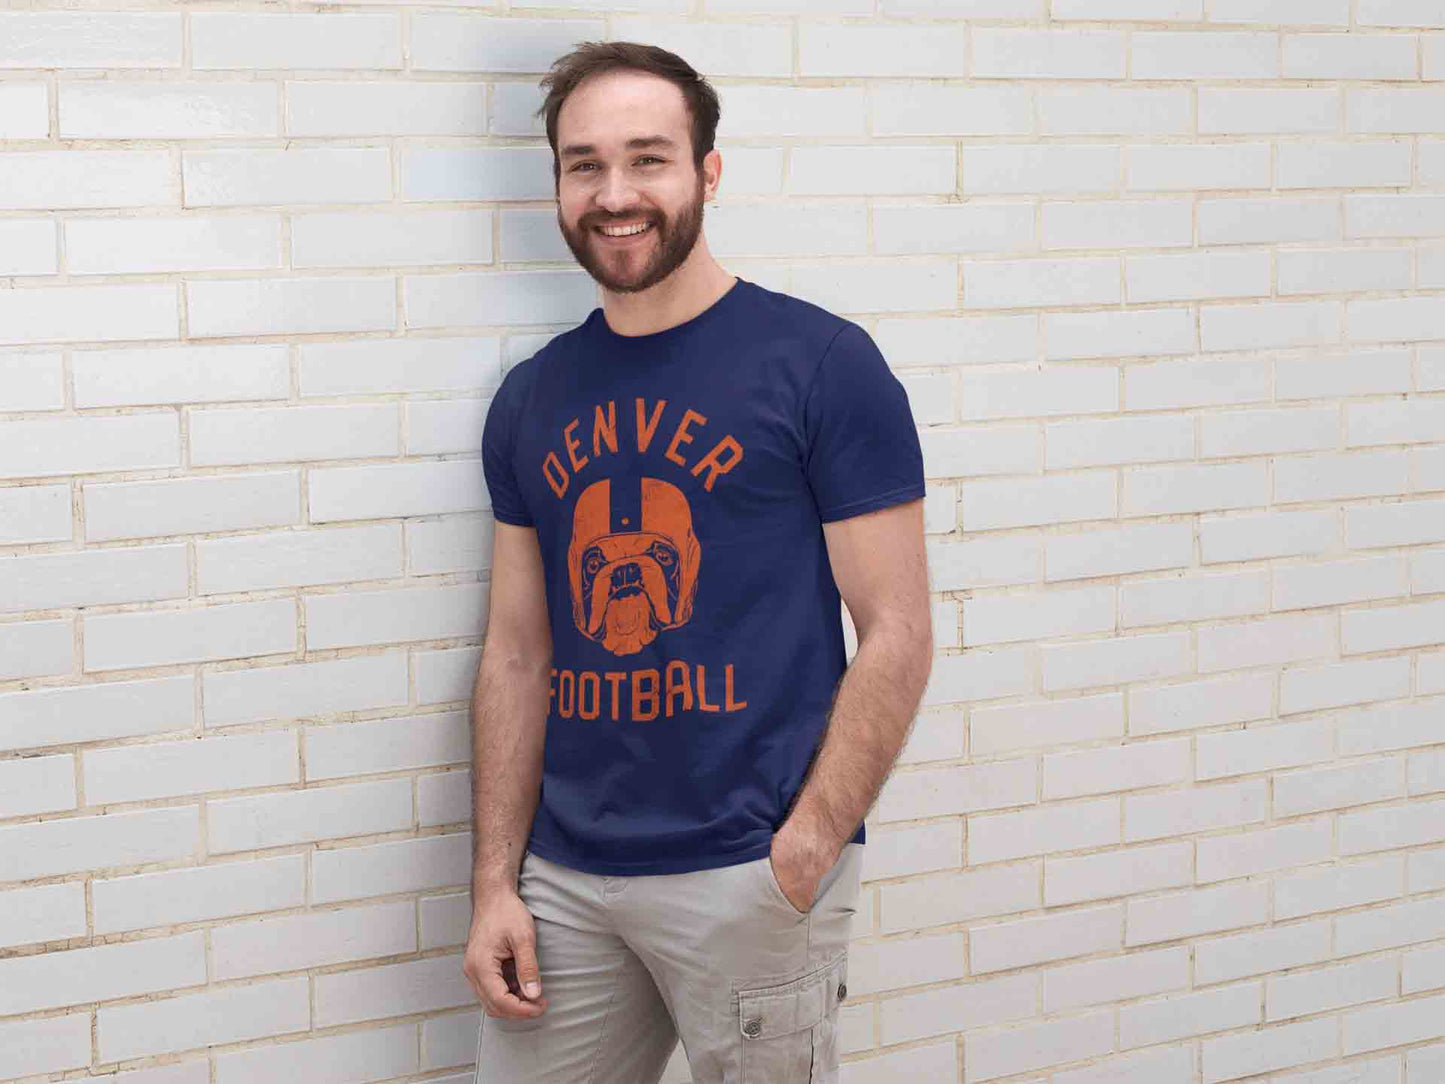 Denver Football English Bulldog T-Shirt